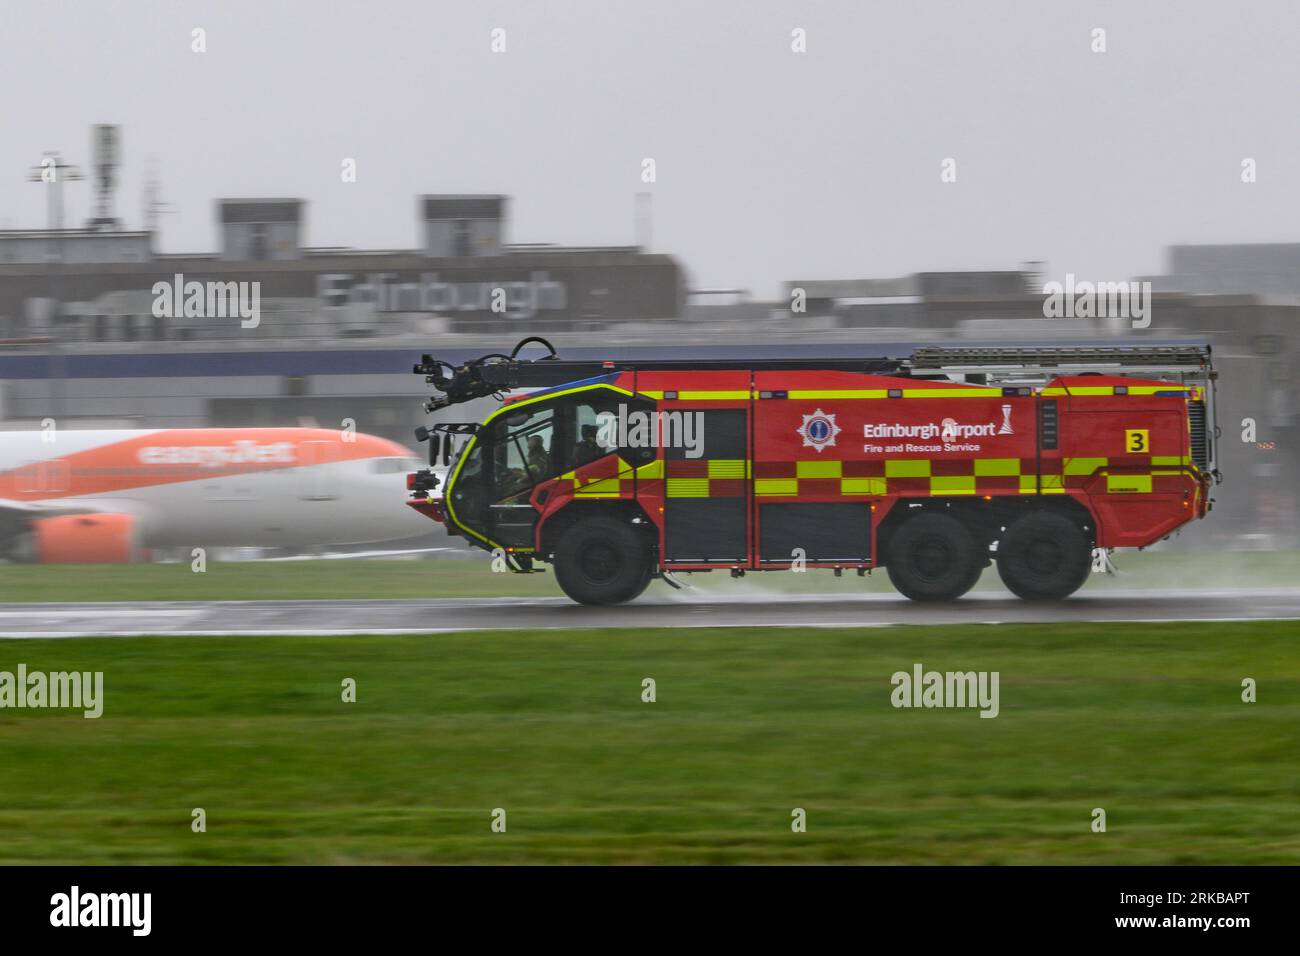 An Edinburgh Airport Fire Service Rosenbauer Panther Fire Truck Heads Down A Rain Soaked Runway During An Emergency Incident With A Qatar Airways A350 Stock Photo